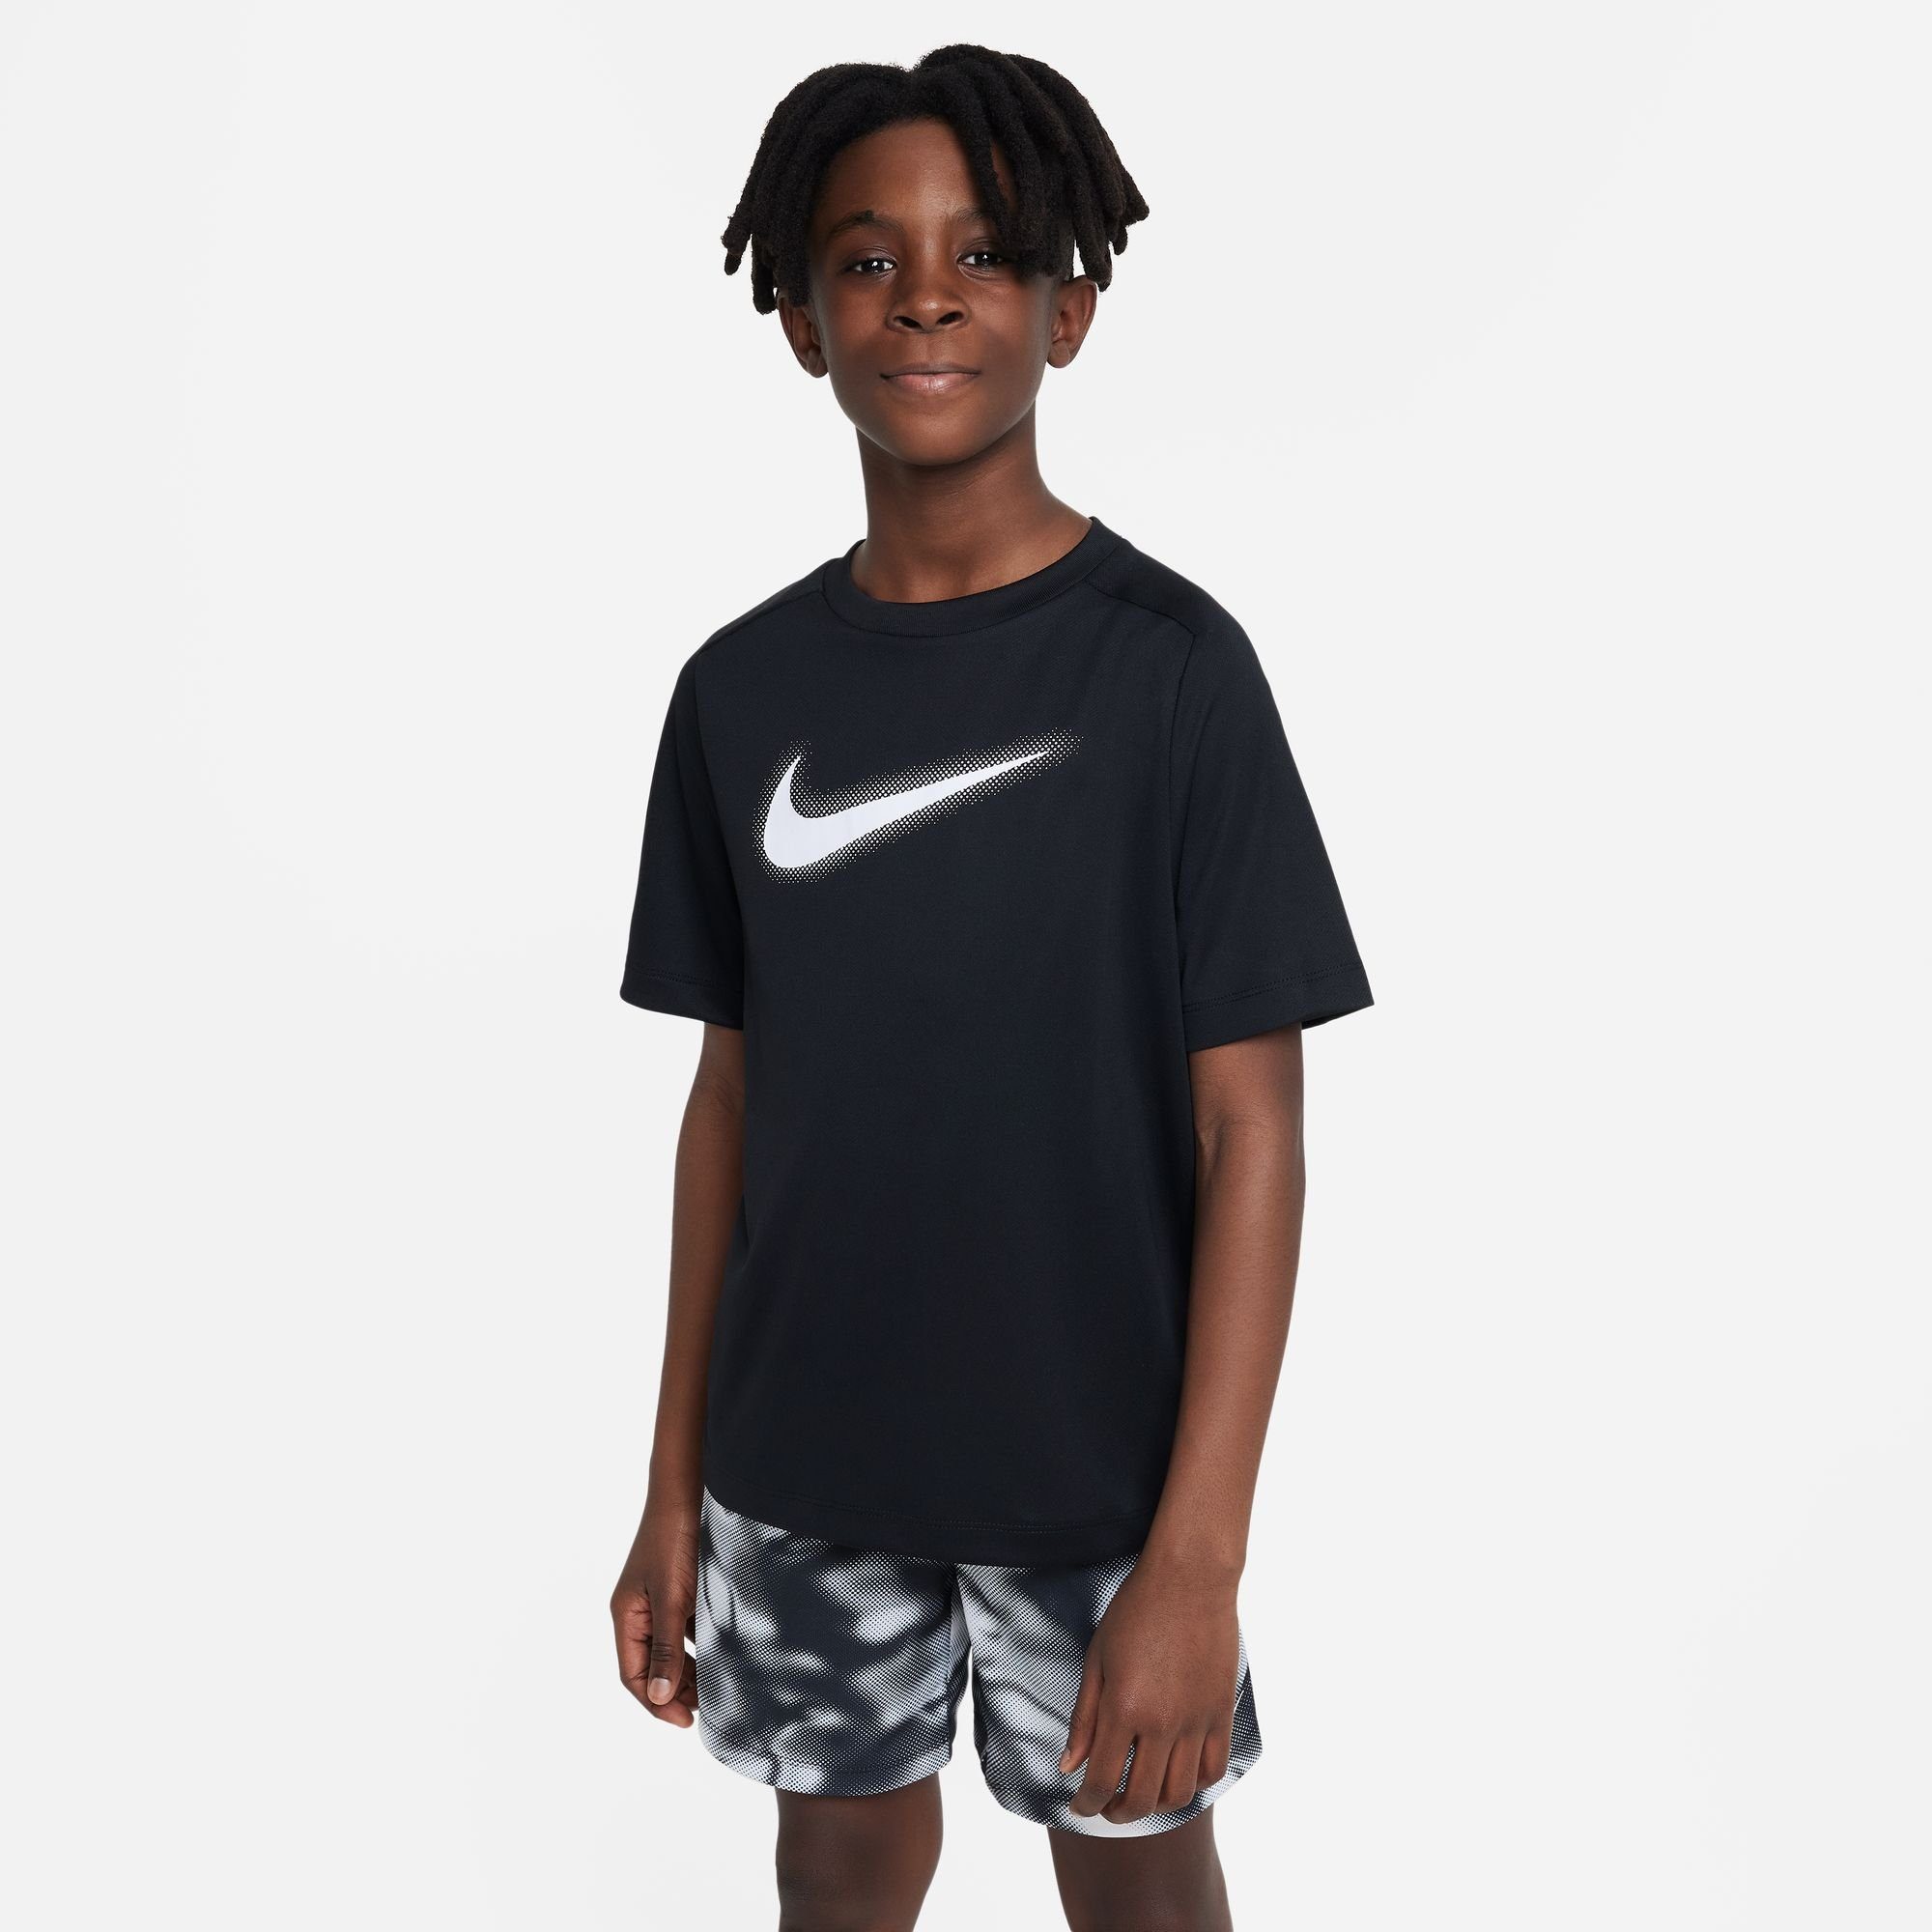 TOP (BOYS) MULTI+ BIG BLACK/WHITE Nike GRAPHIC Trainingsshirt TRAINING DRI-FIT KIDS'